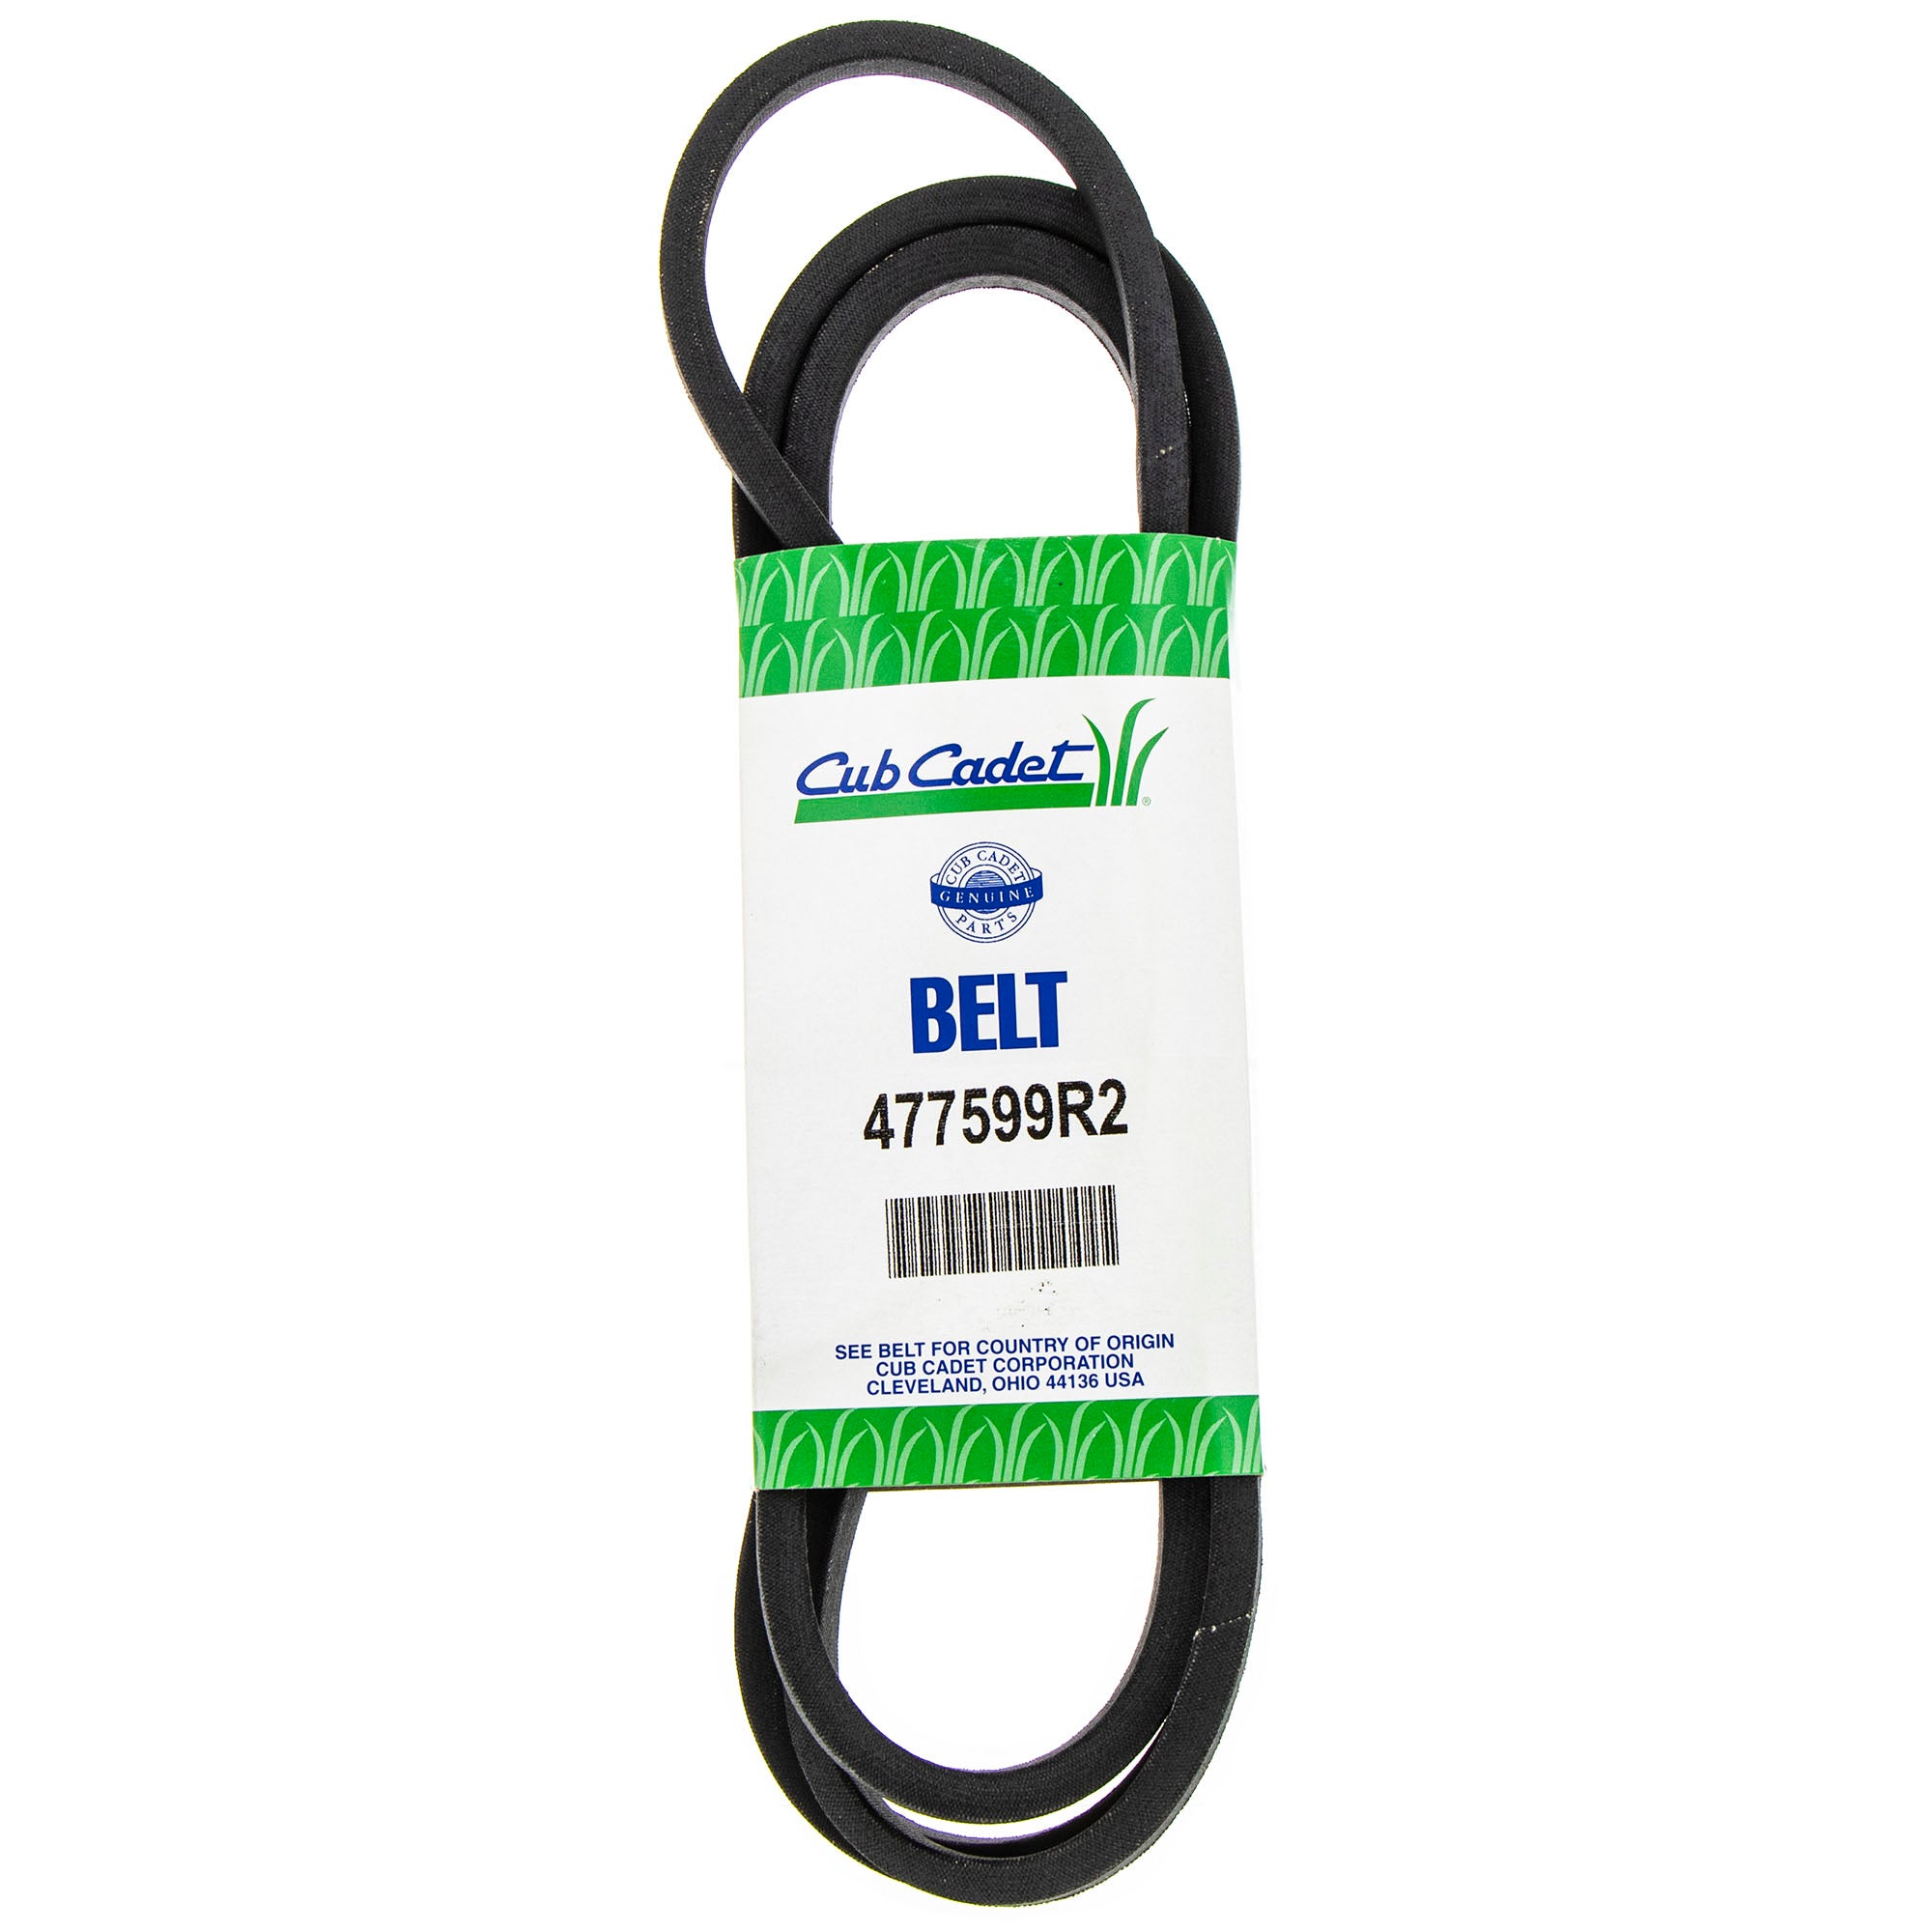 CUB CADET IH-477599-R2 Belt